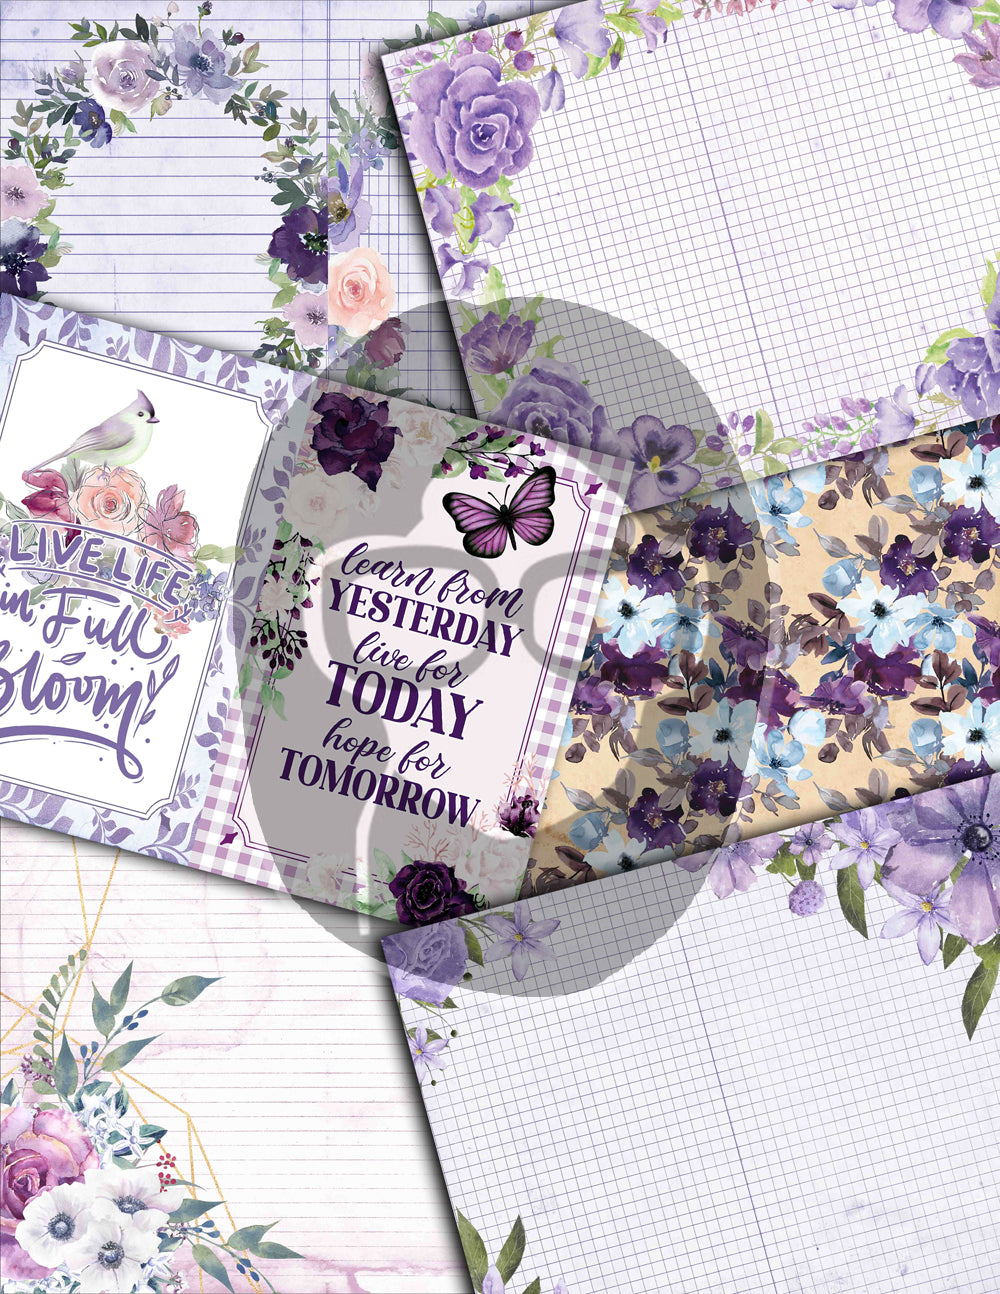 Purple Junk Journal Kit, Printable Journal Bundle -40pg Digital Download- Affirmations Kit, Positive Quotes, Journaling Ephemera, For Women